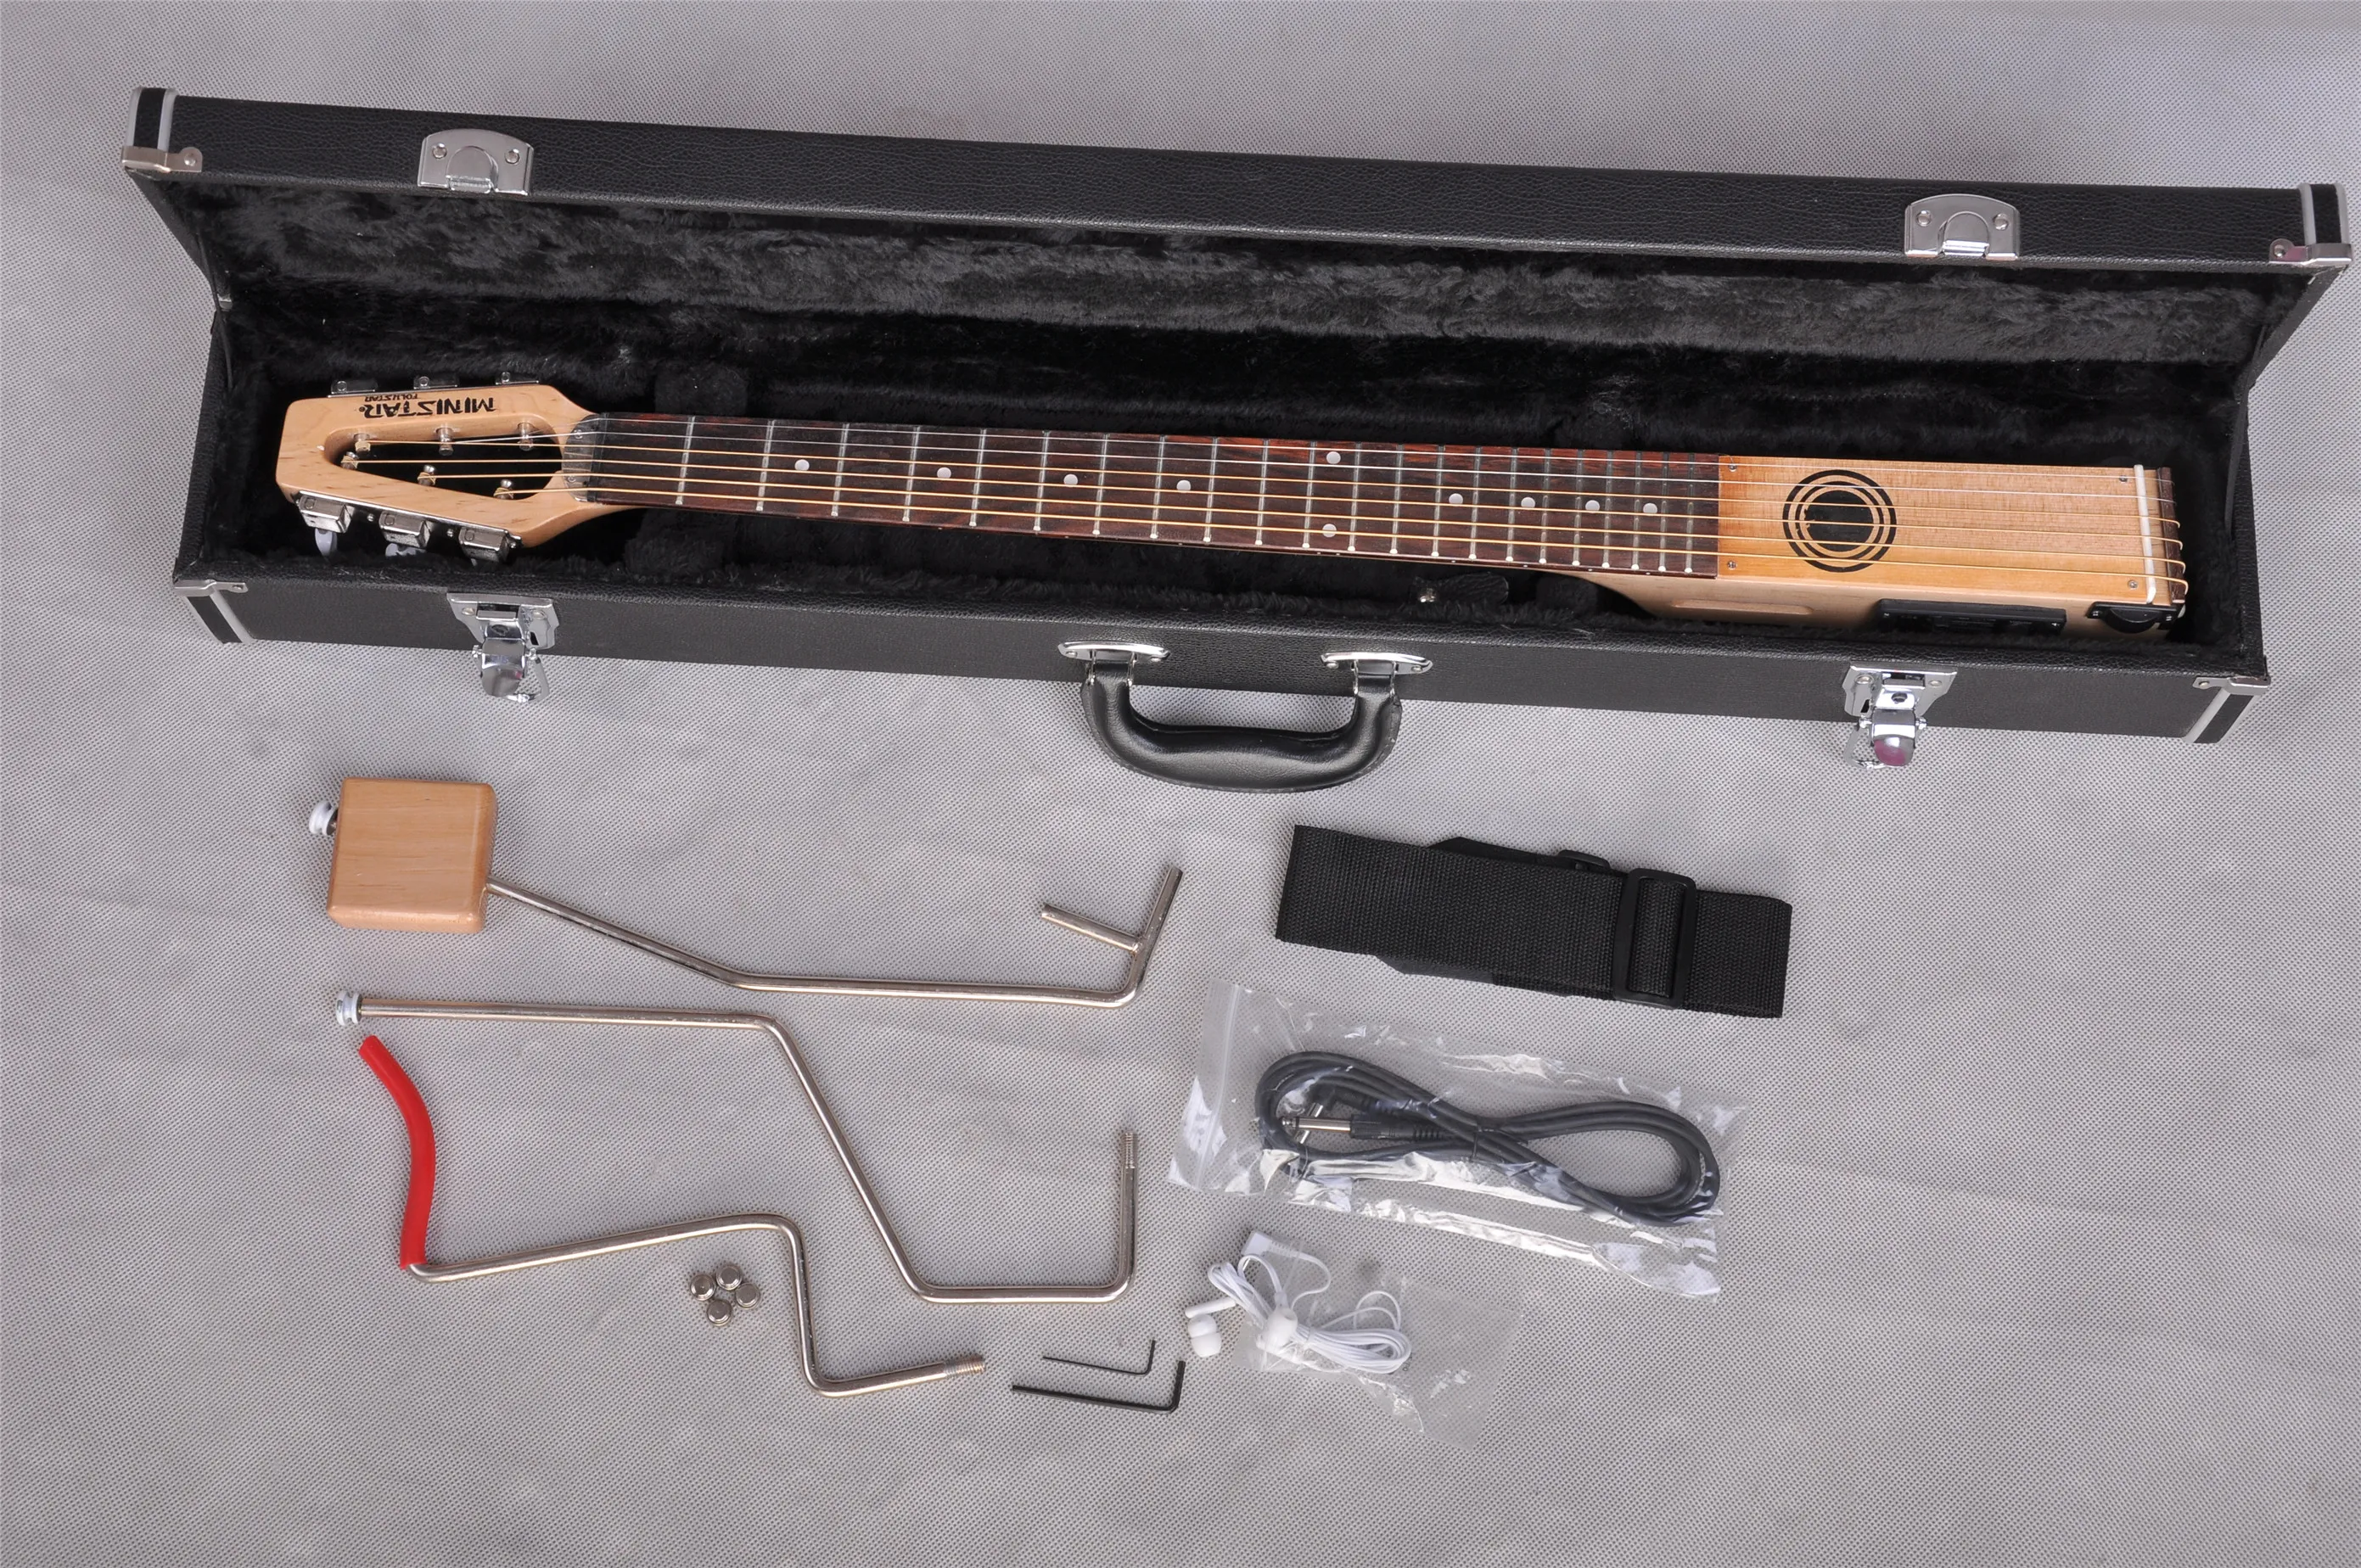 In Stock Mini Star FolkStar Travel Electric Guitar met Carrying Bag Mini Portable Silent GuitarWhole4062567